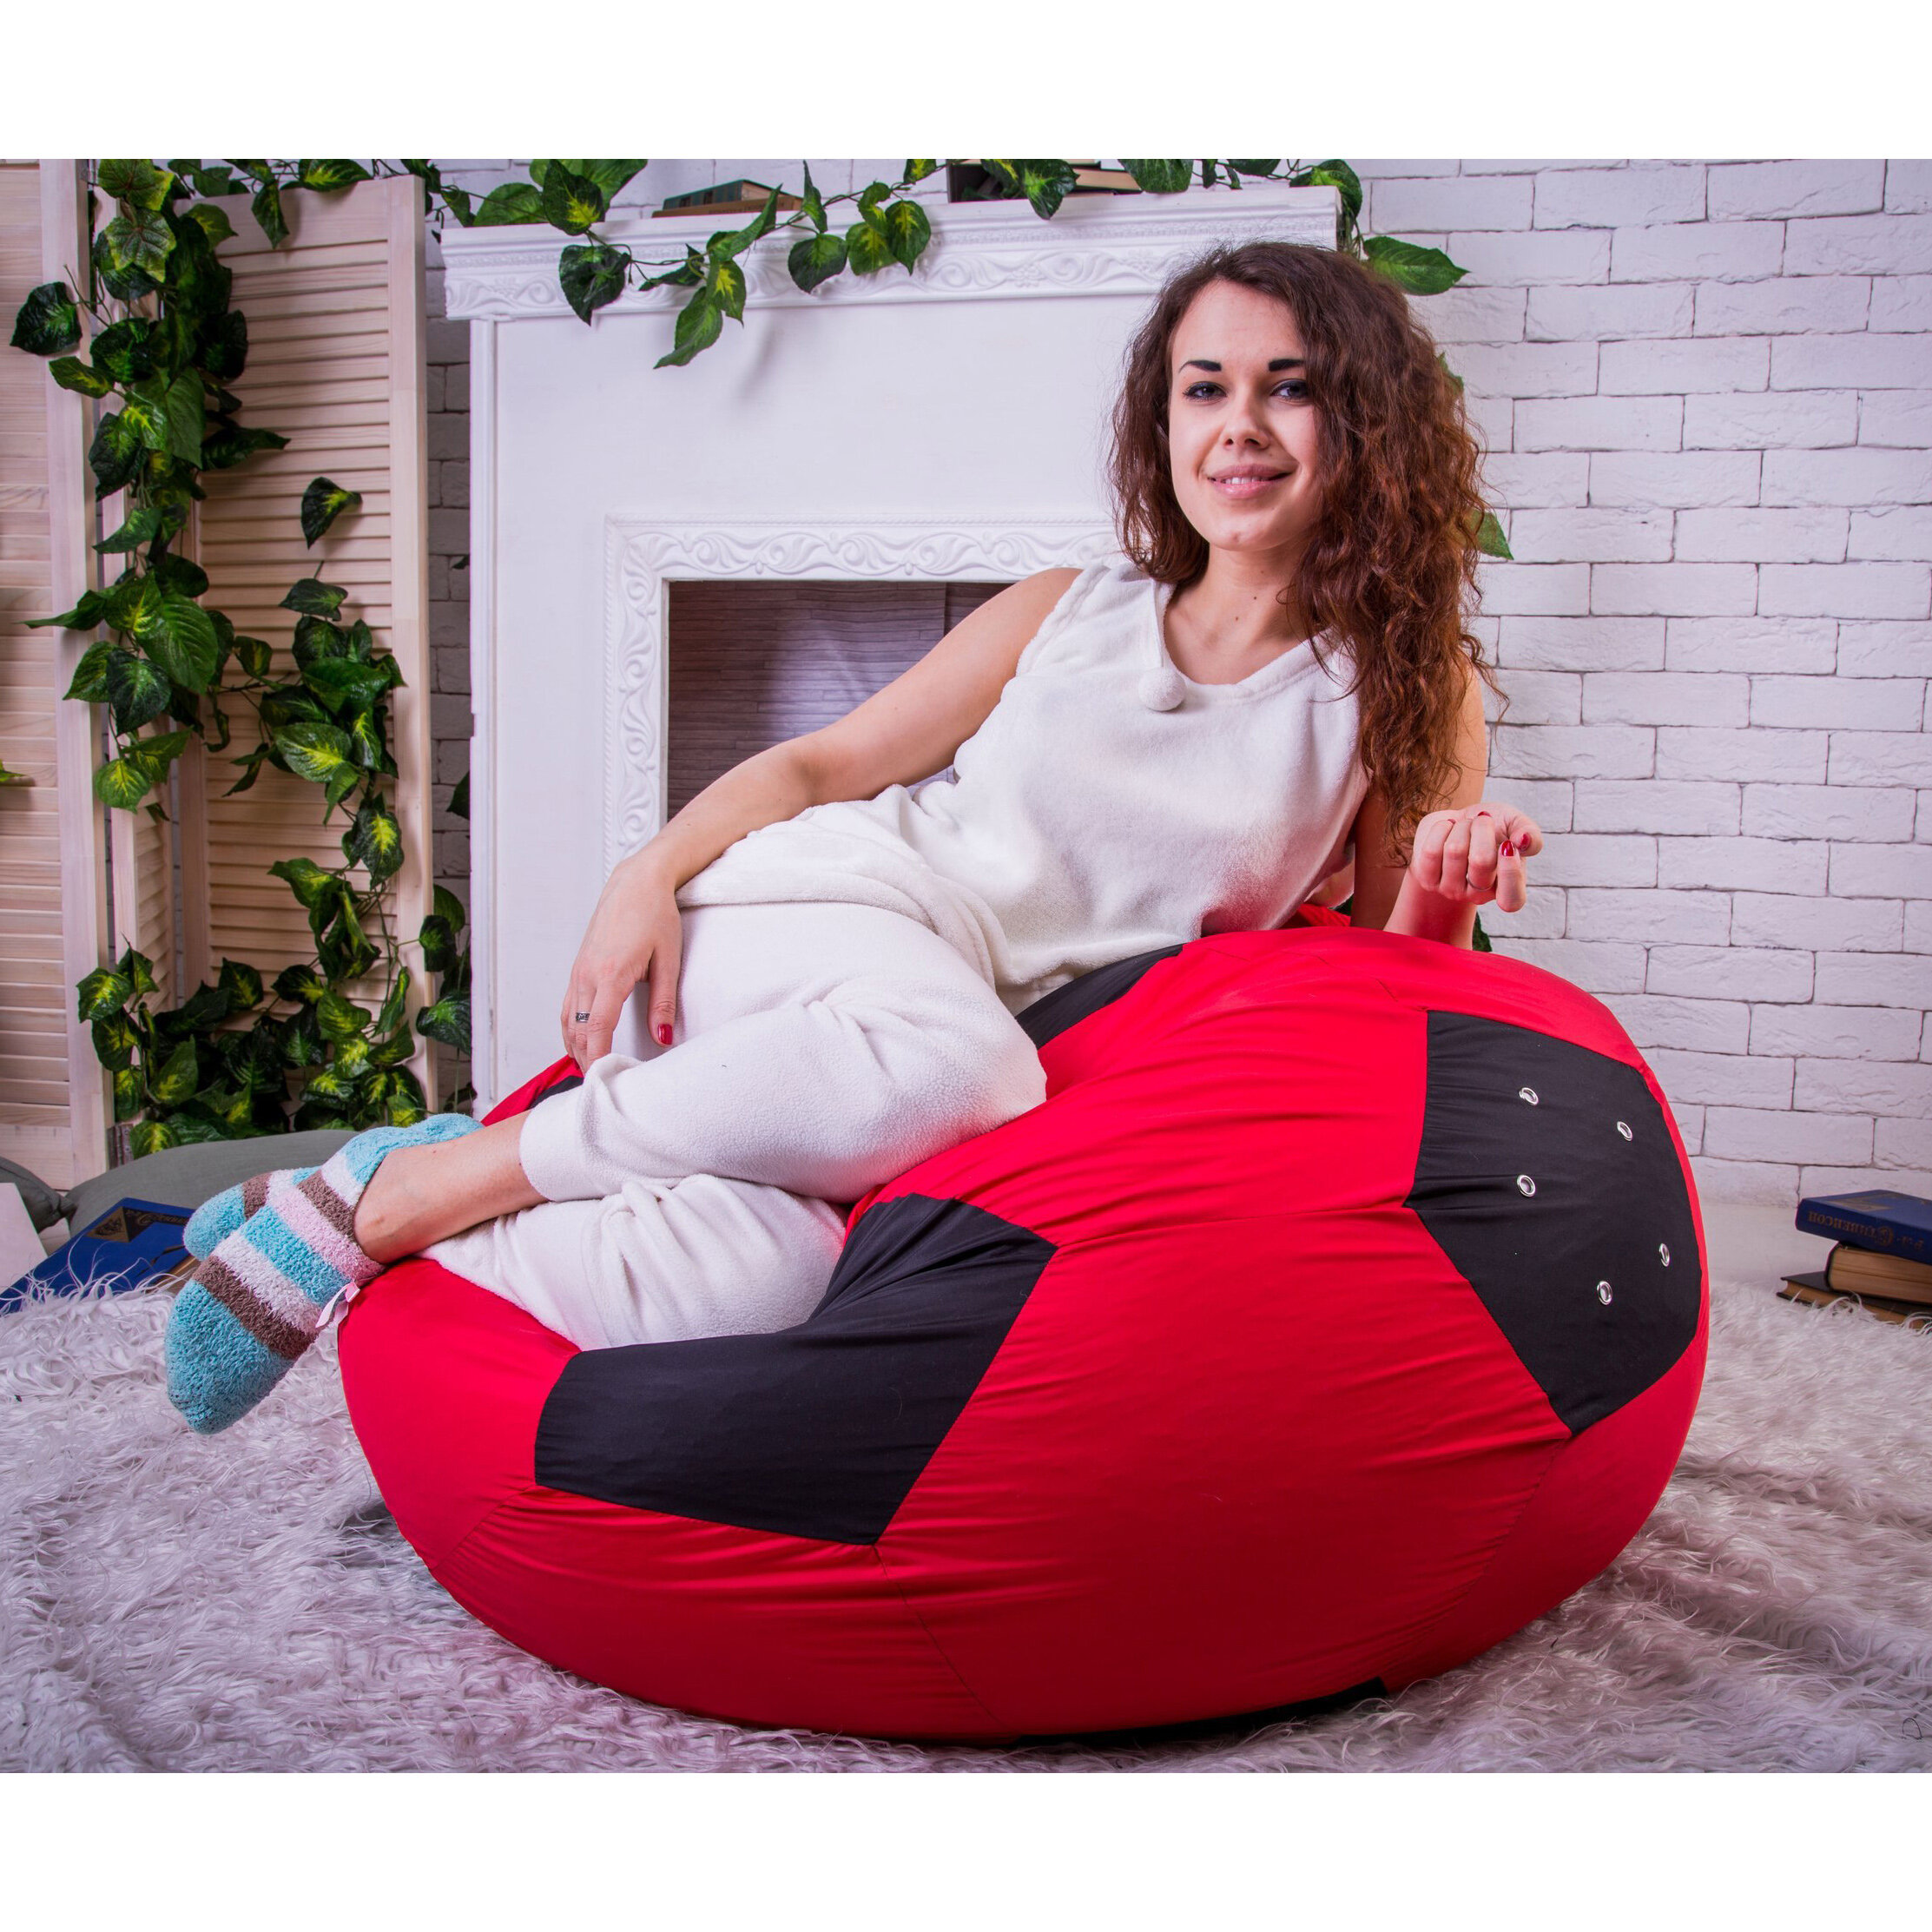 Мягкое кресло "Мяч" красно-черное, ткань Дюспо милки, Диаметр 100см / 100 литров от производителя kreslo-Igrushka - фотография № 1